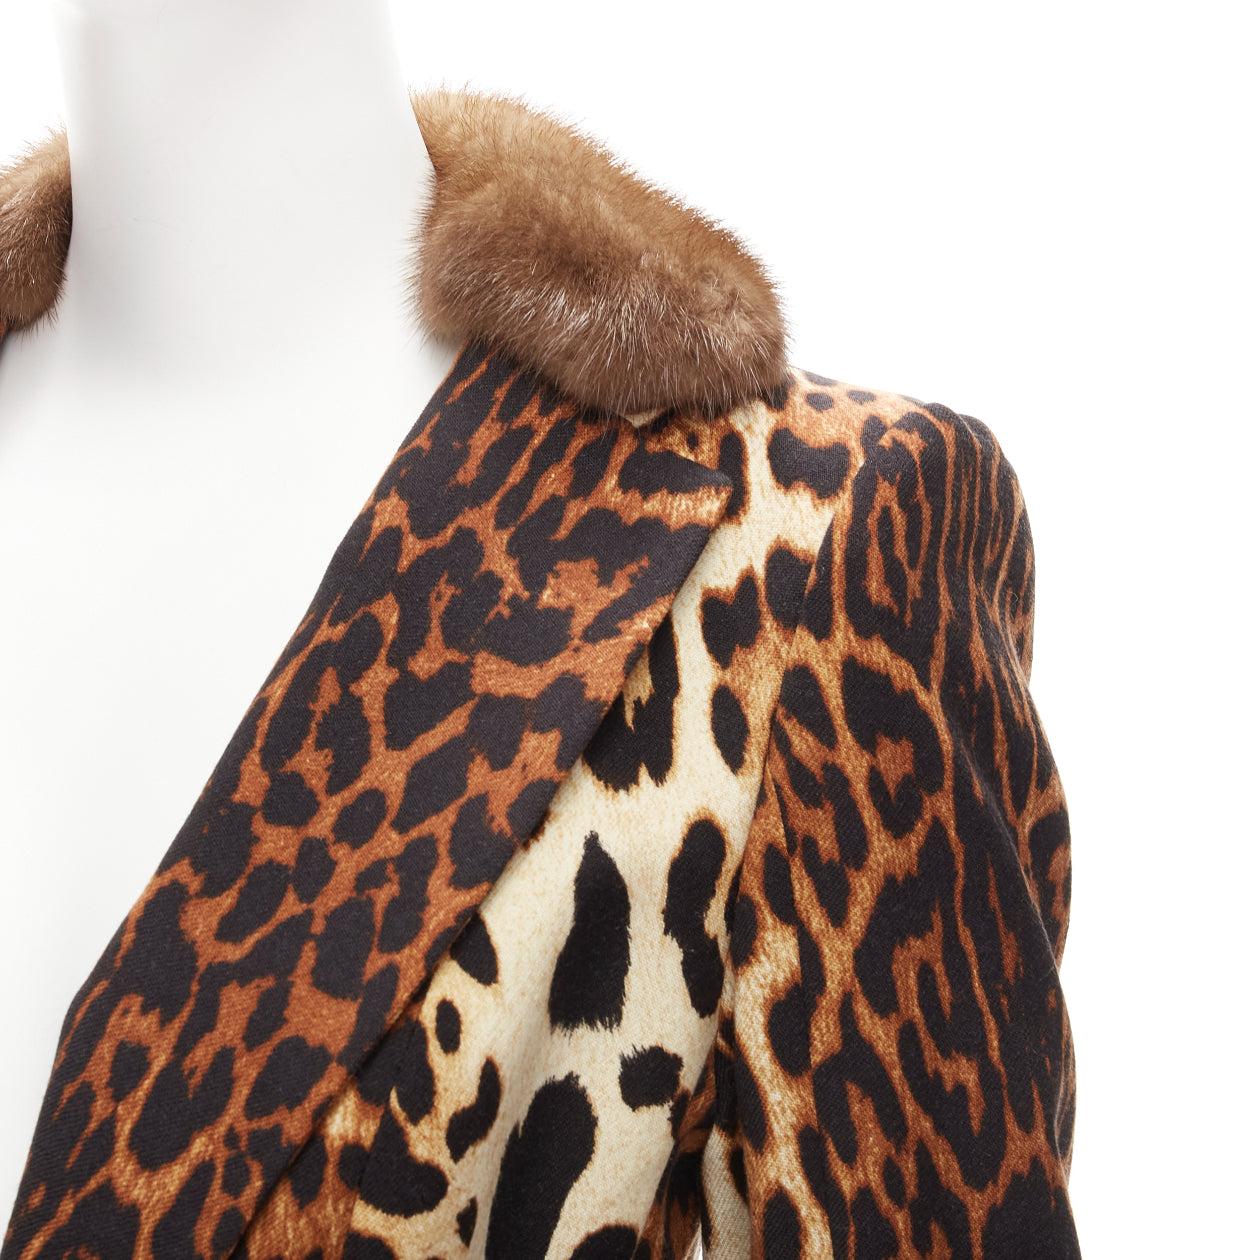 CHRISTIAN DIOR Vintage leopard wool fur trim zipper detail jacket FR42 XL
Reference: TGAS/D00988
Brand: Christian Dior
Designer: John Galliano
Material: Wool, Fur
Color: Brown
Pattern: Animal Print
Closure: Button
Lining: Brown Silk
Extra Details: